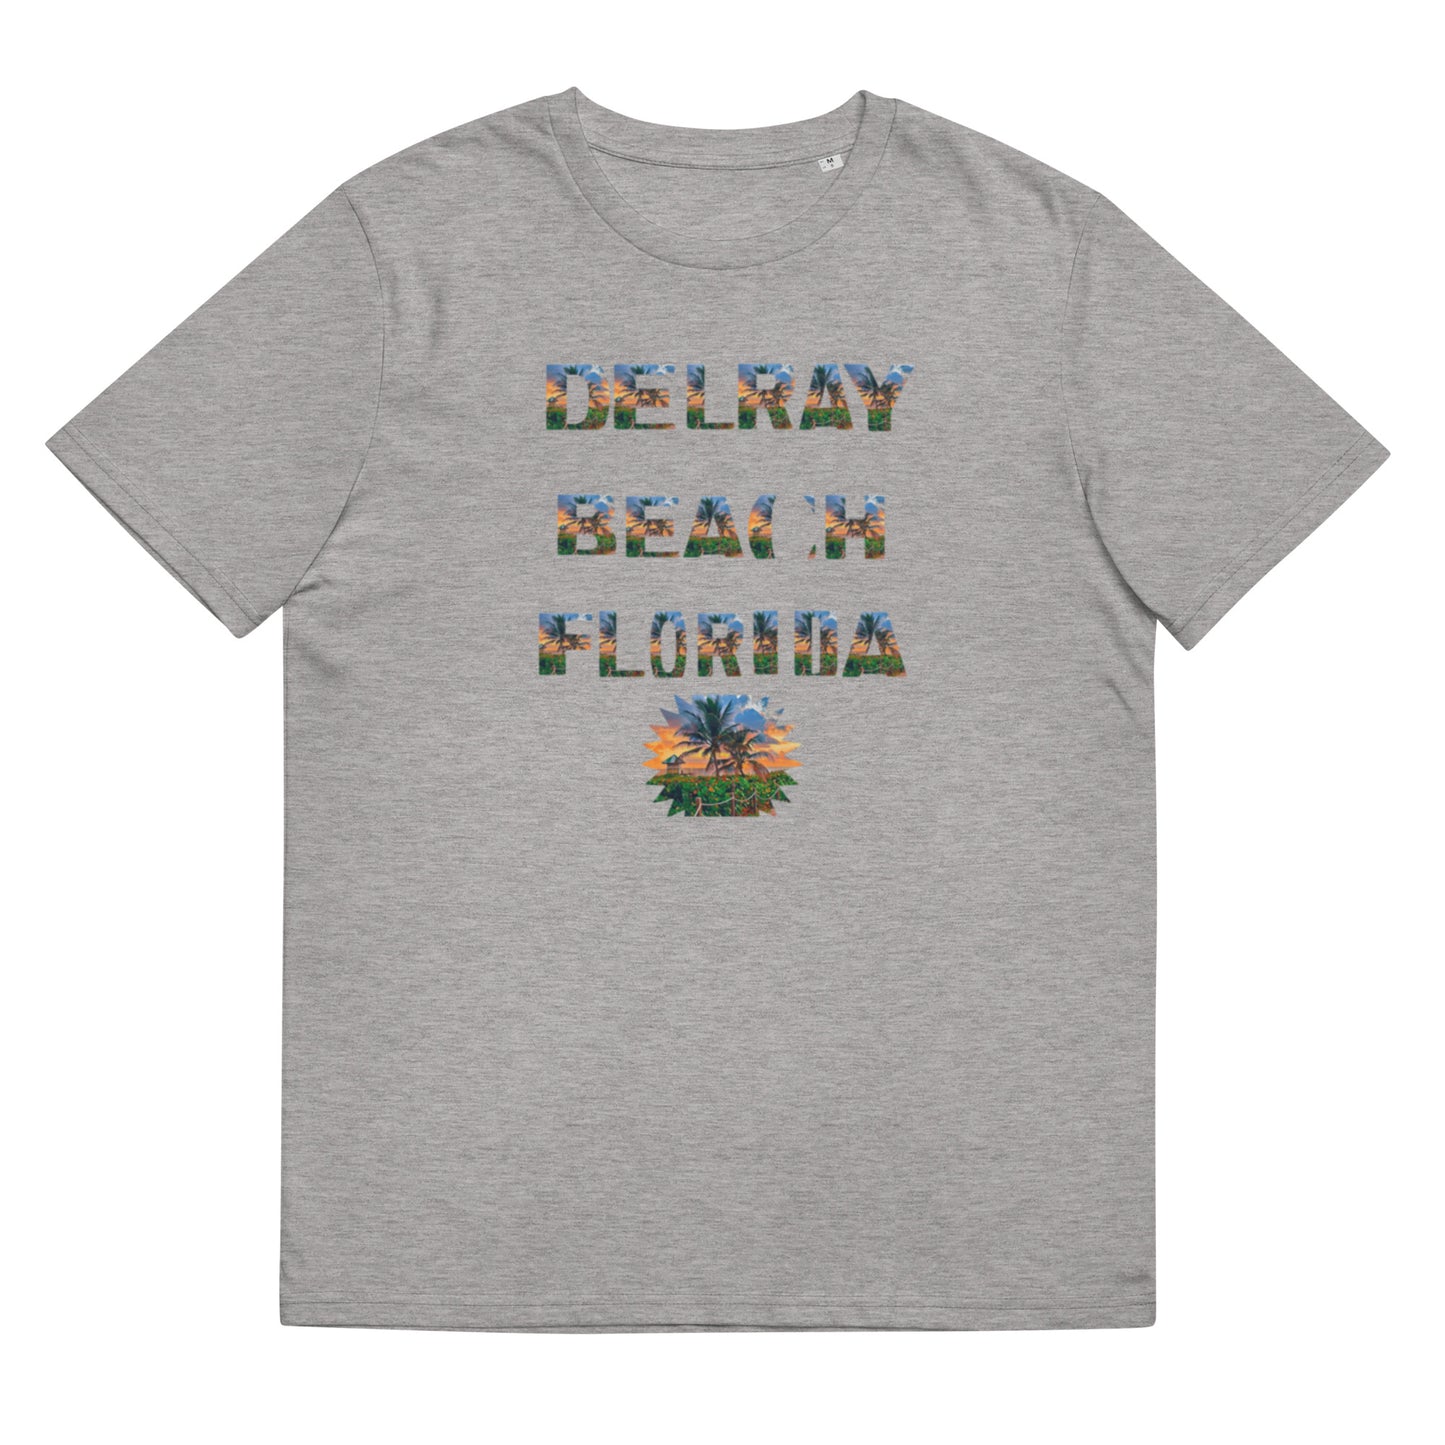 Delray Beach Painting Unisex Organic Cotton T-Shirt